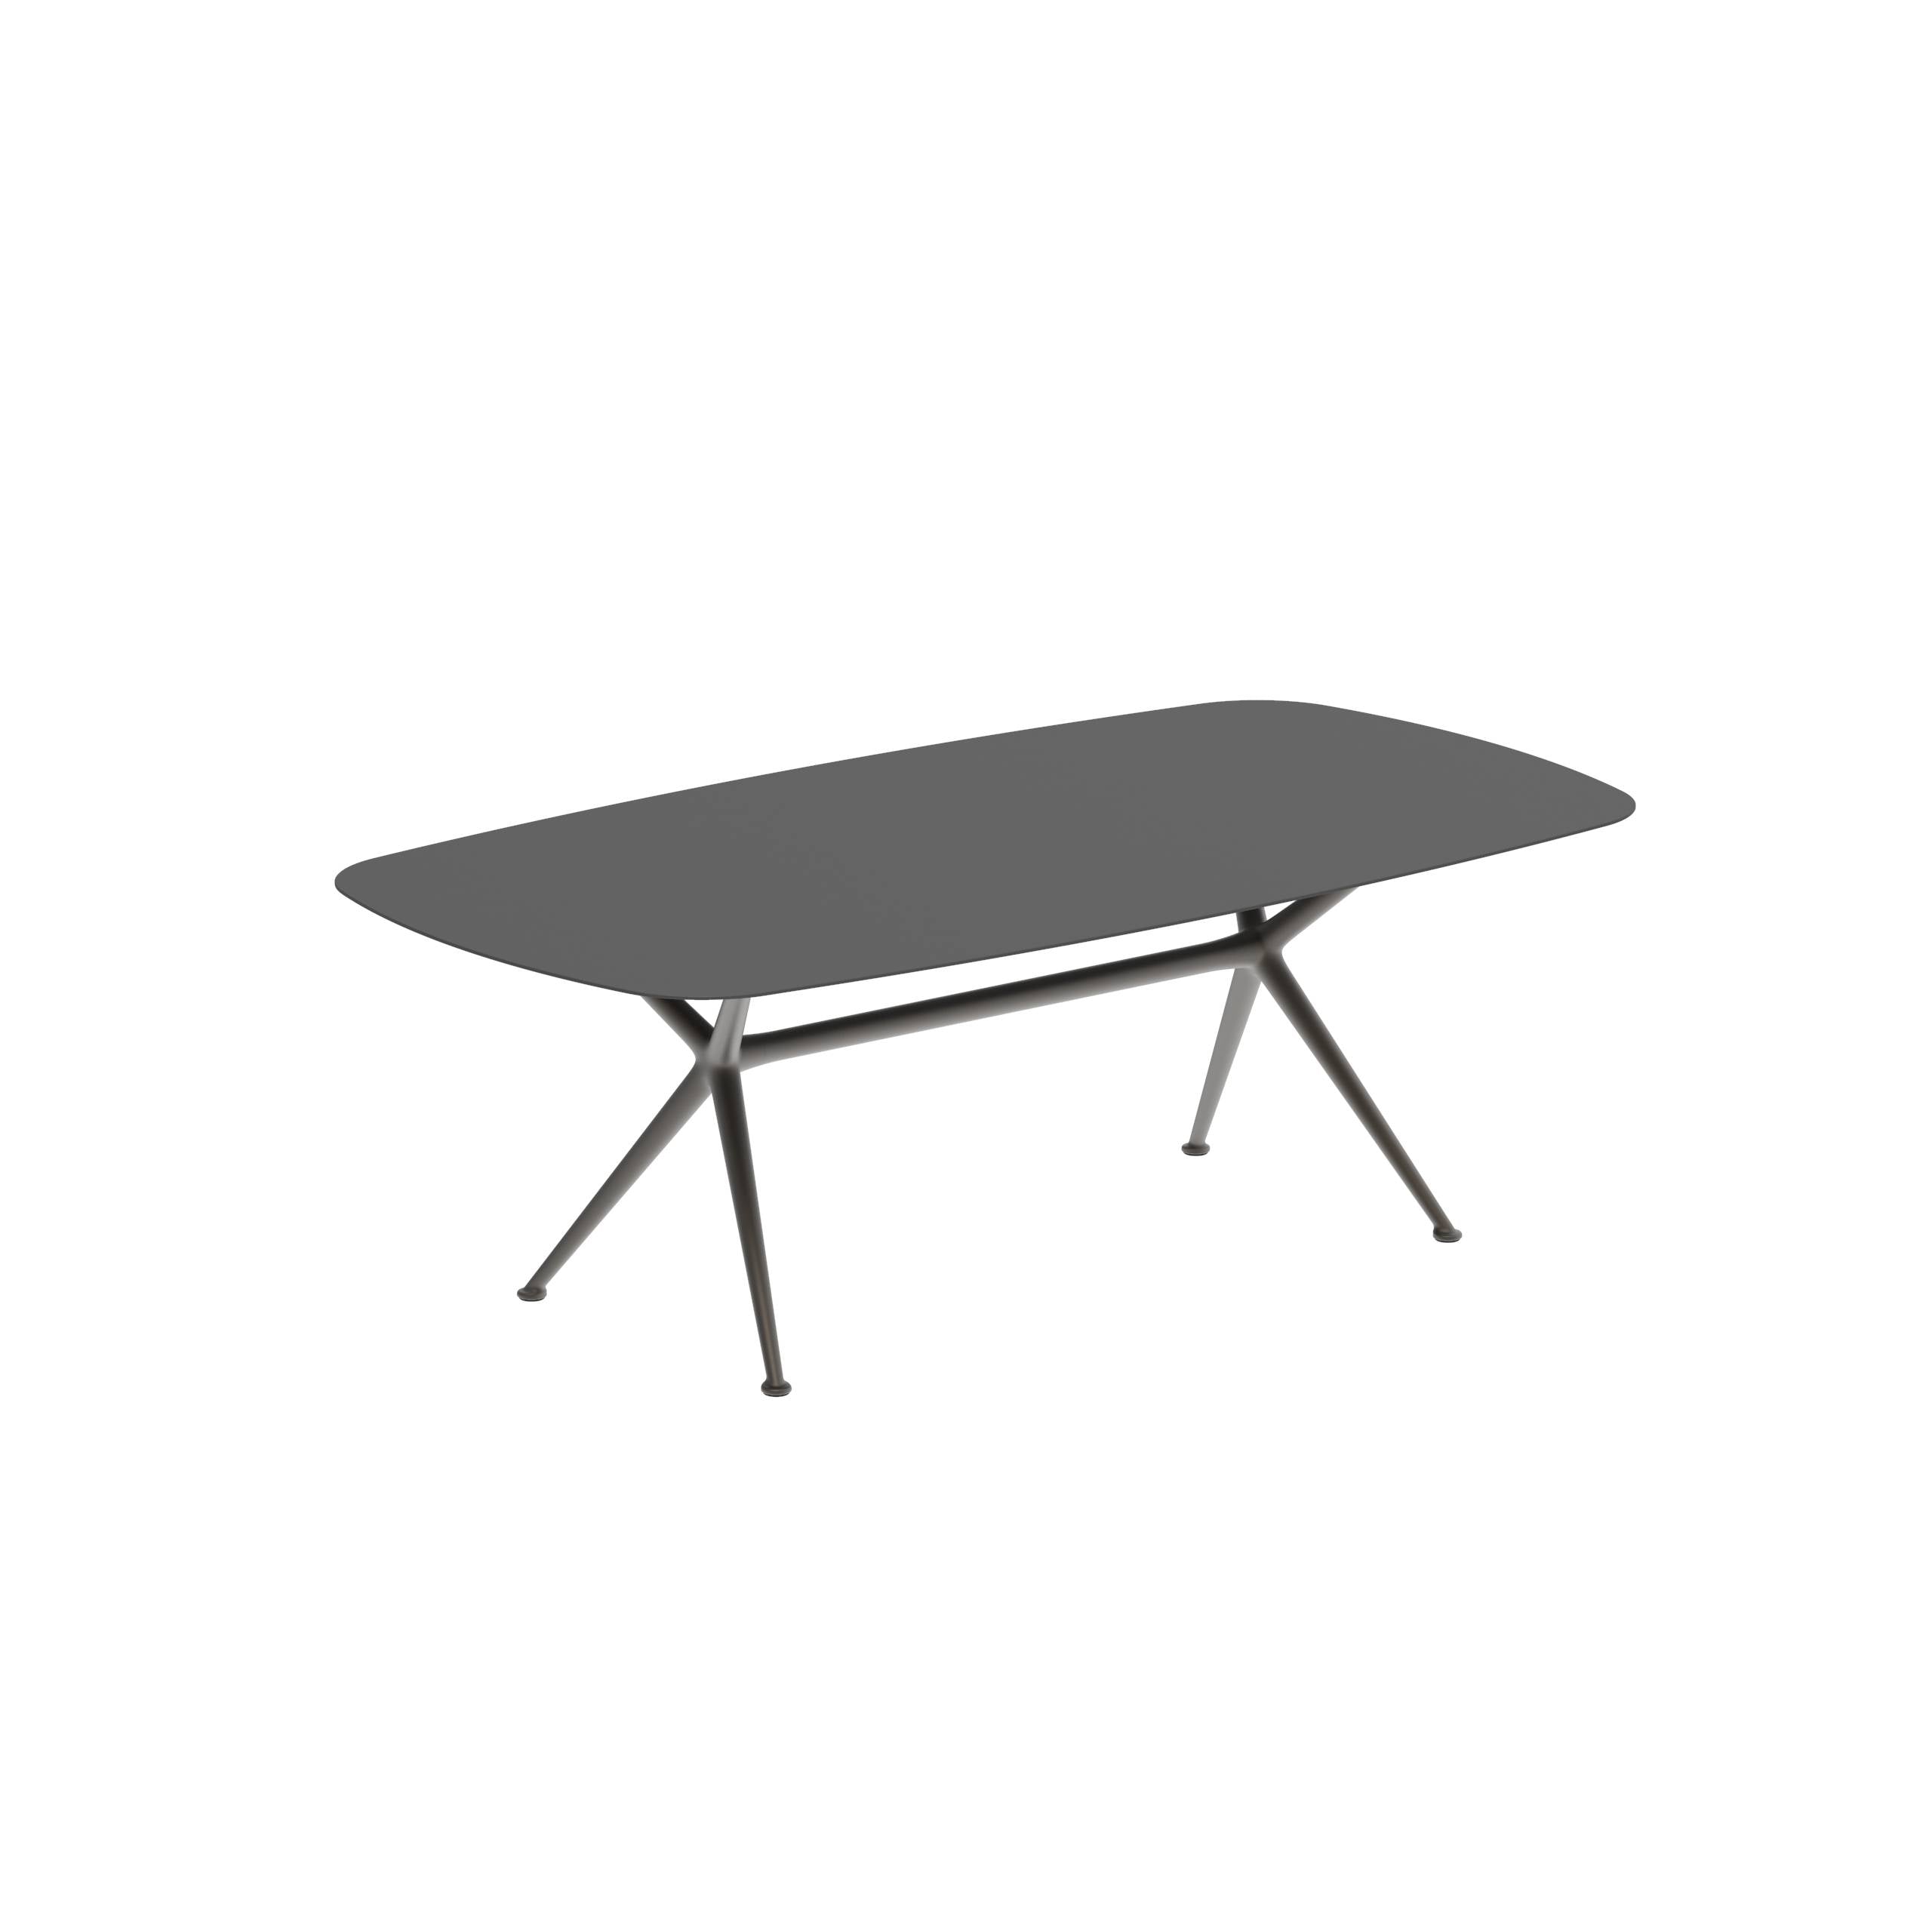 Exes Table 220x120cm Alu Legs Bronze - Table Top Ceramic Black